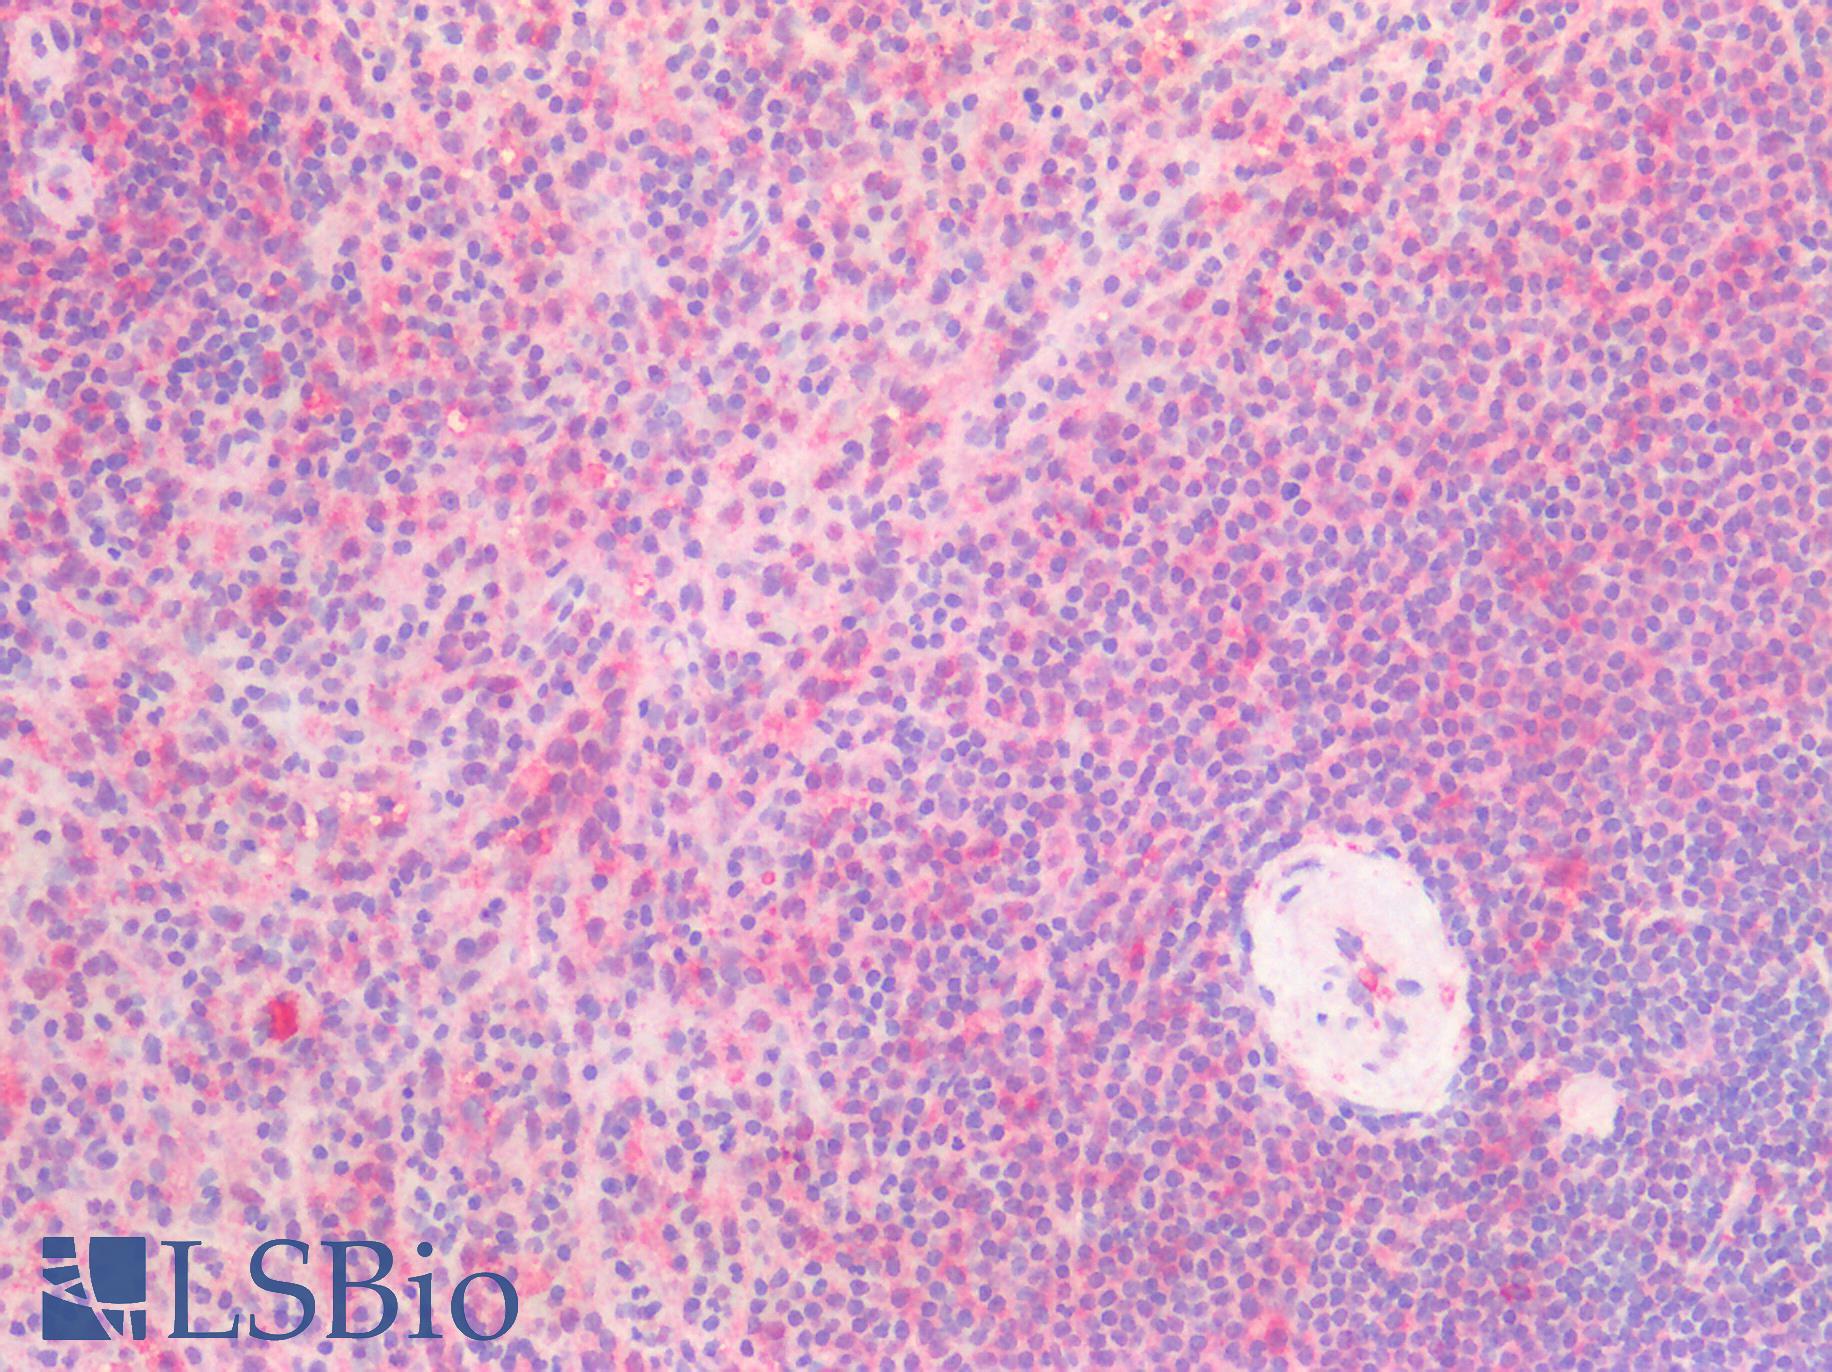 THBD / CD141 / Thrombomodulin Antibody - Human Spleen: Formalin-Fixed, Paraffin-Embedded (FFPE)